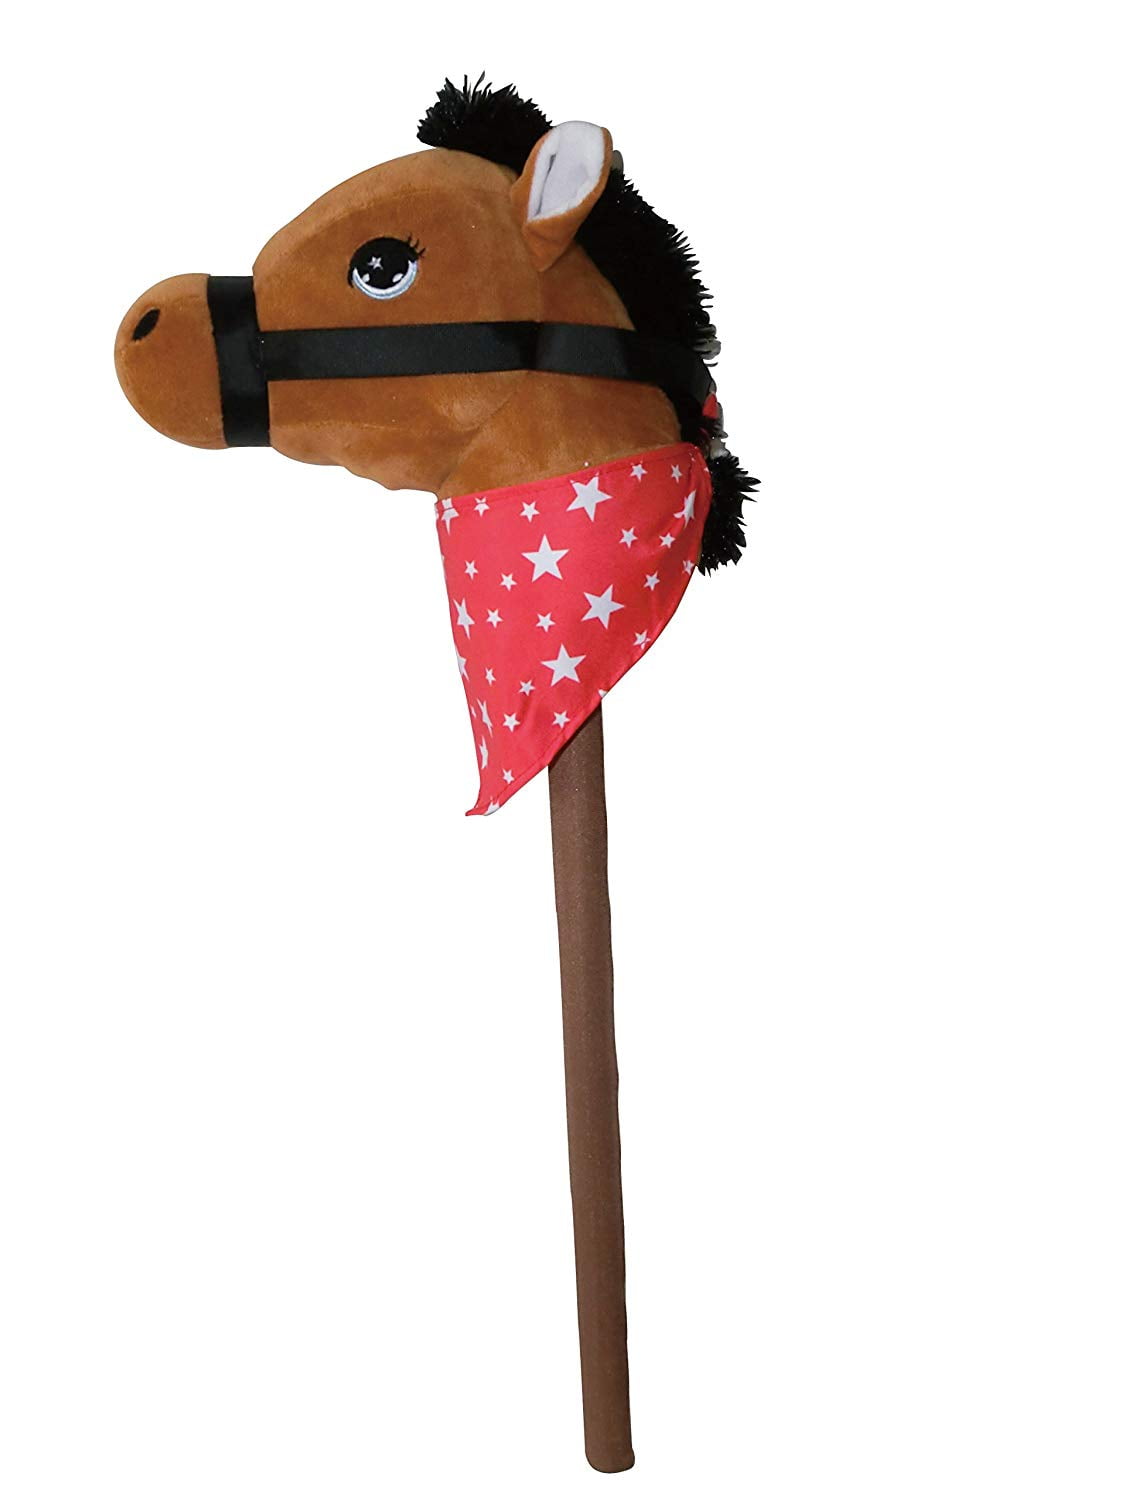 stick horse walmart